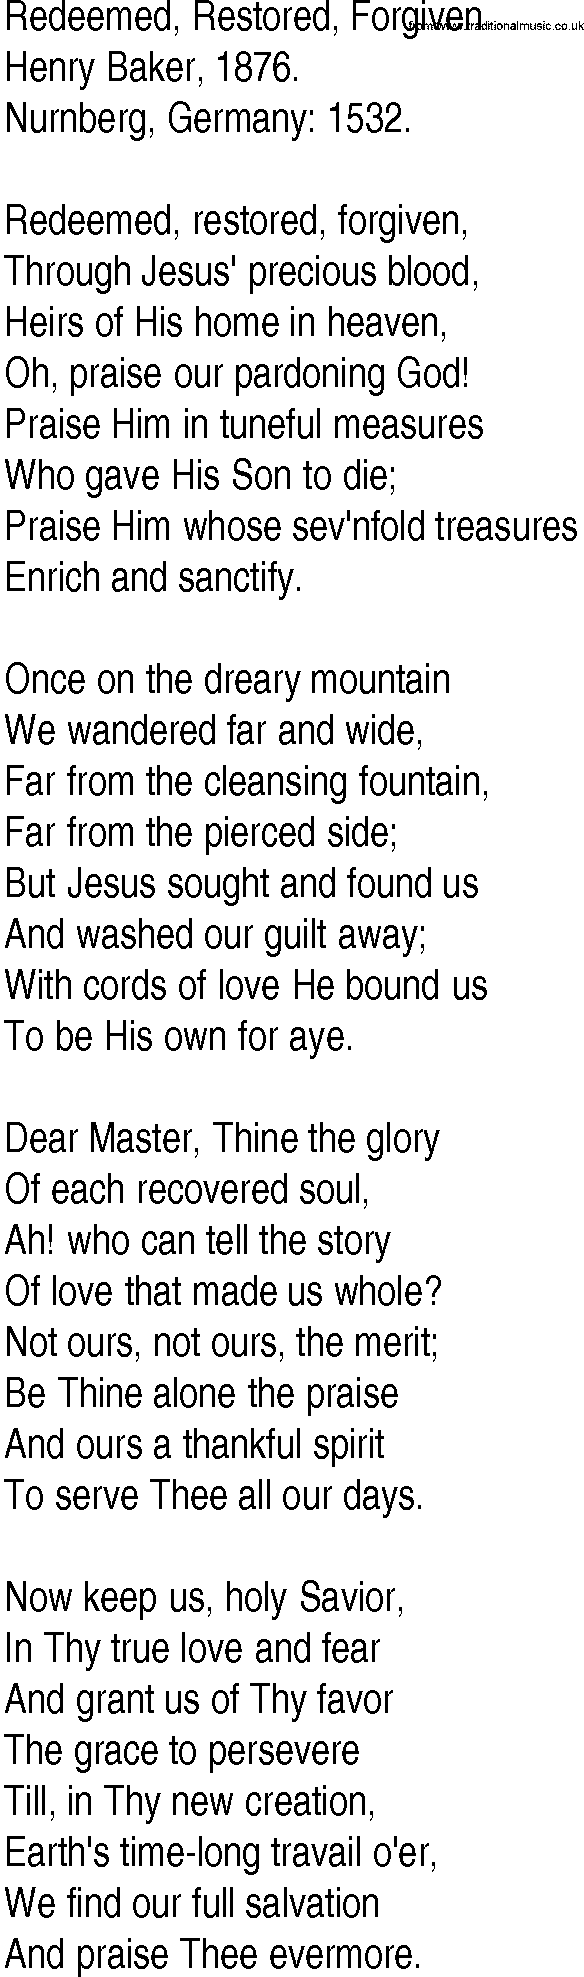 Hymn and Gospel Song: Redeemed, Restored, Forgiven by Henry Baker lyrics